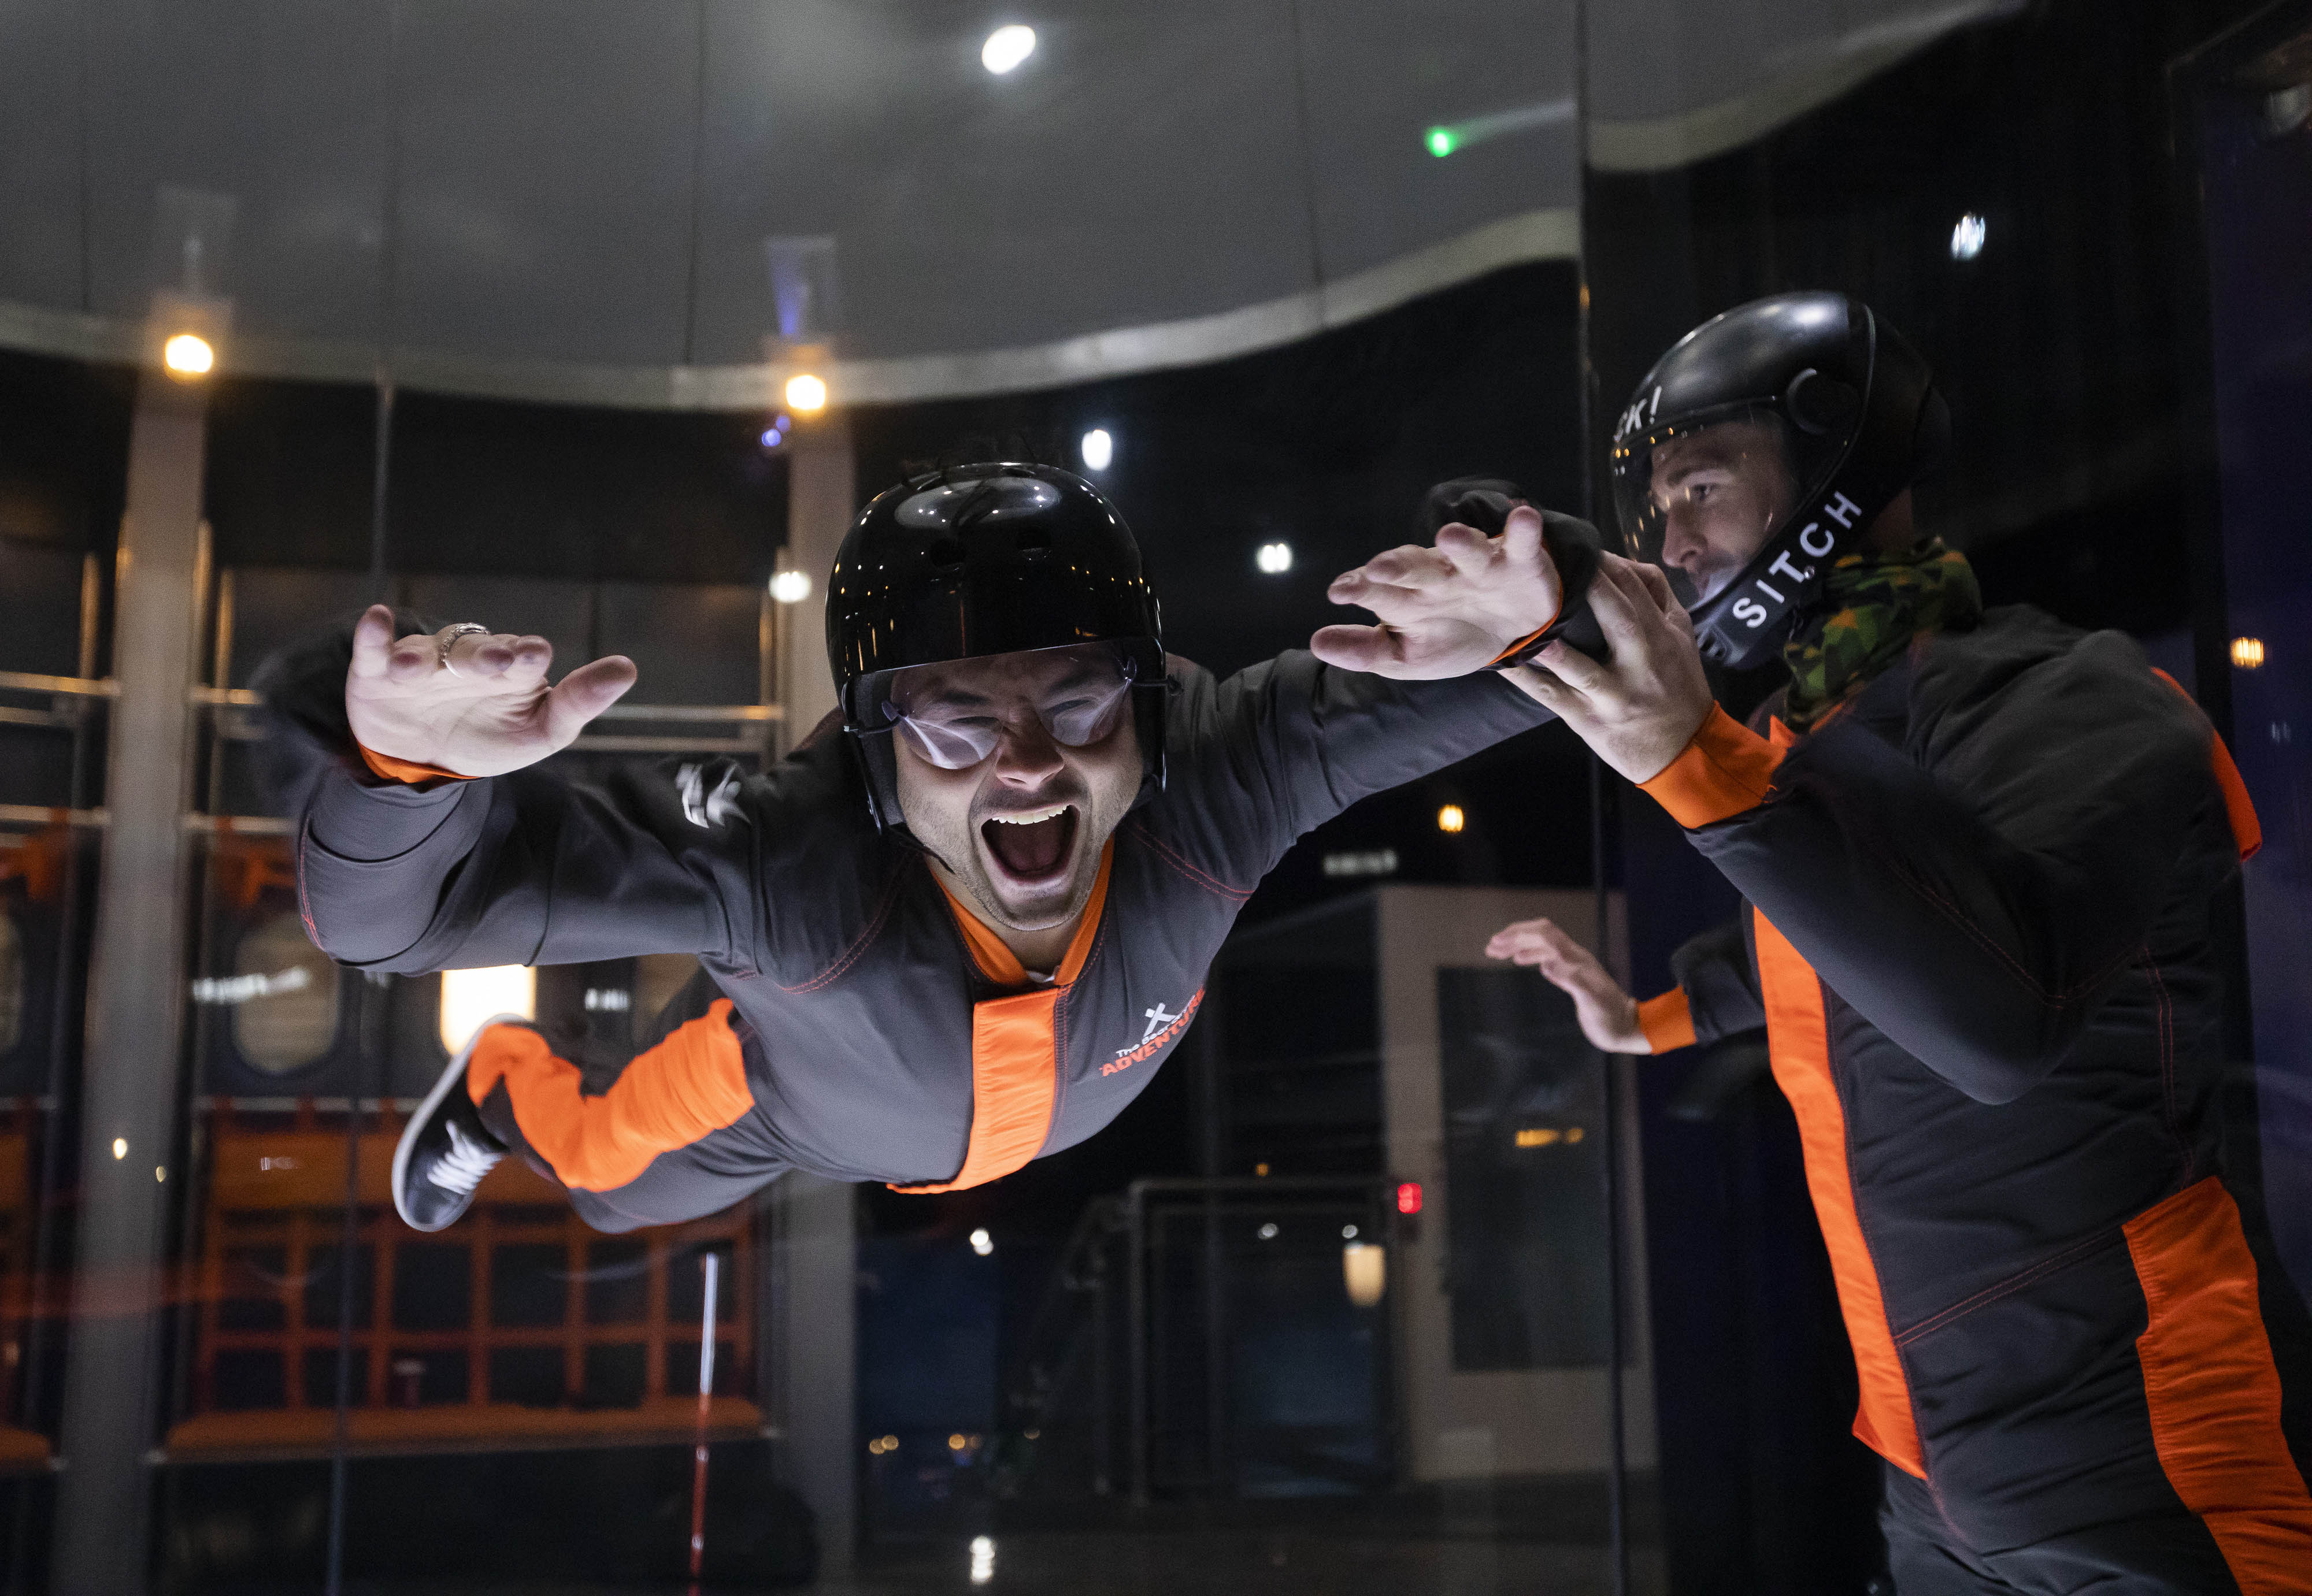 iFly Indoor Skydiving at Bear Grylls Adventure in Birmingham